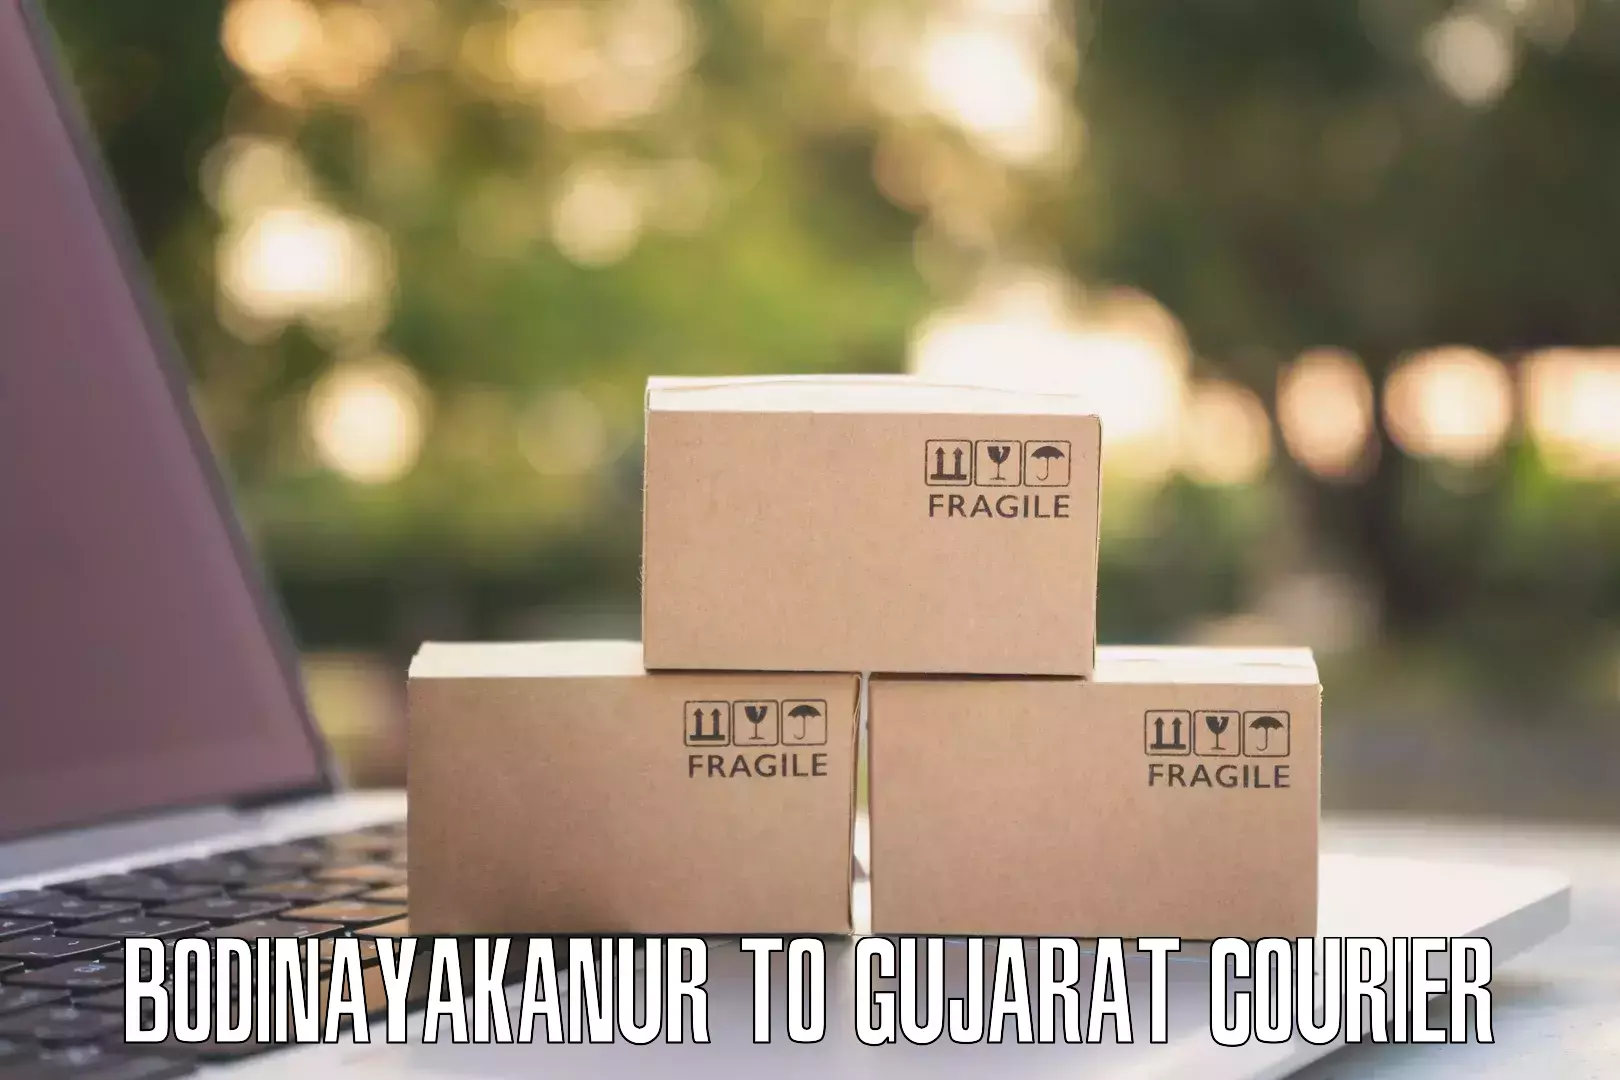 Nationwide shipping capabilities Bodinayakanur to Gujarat